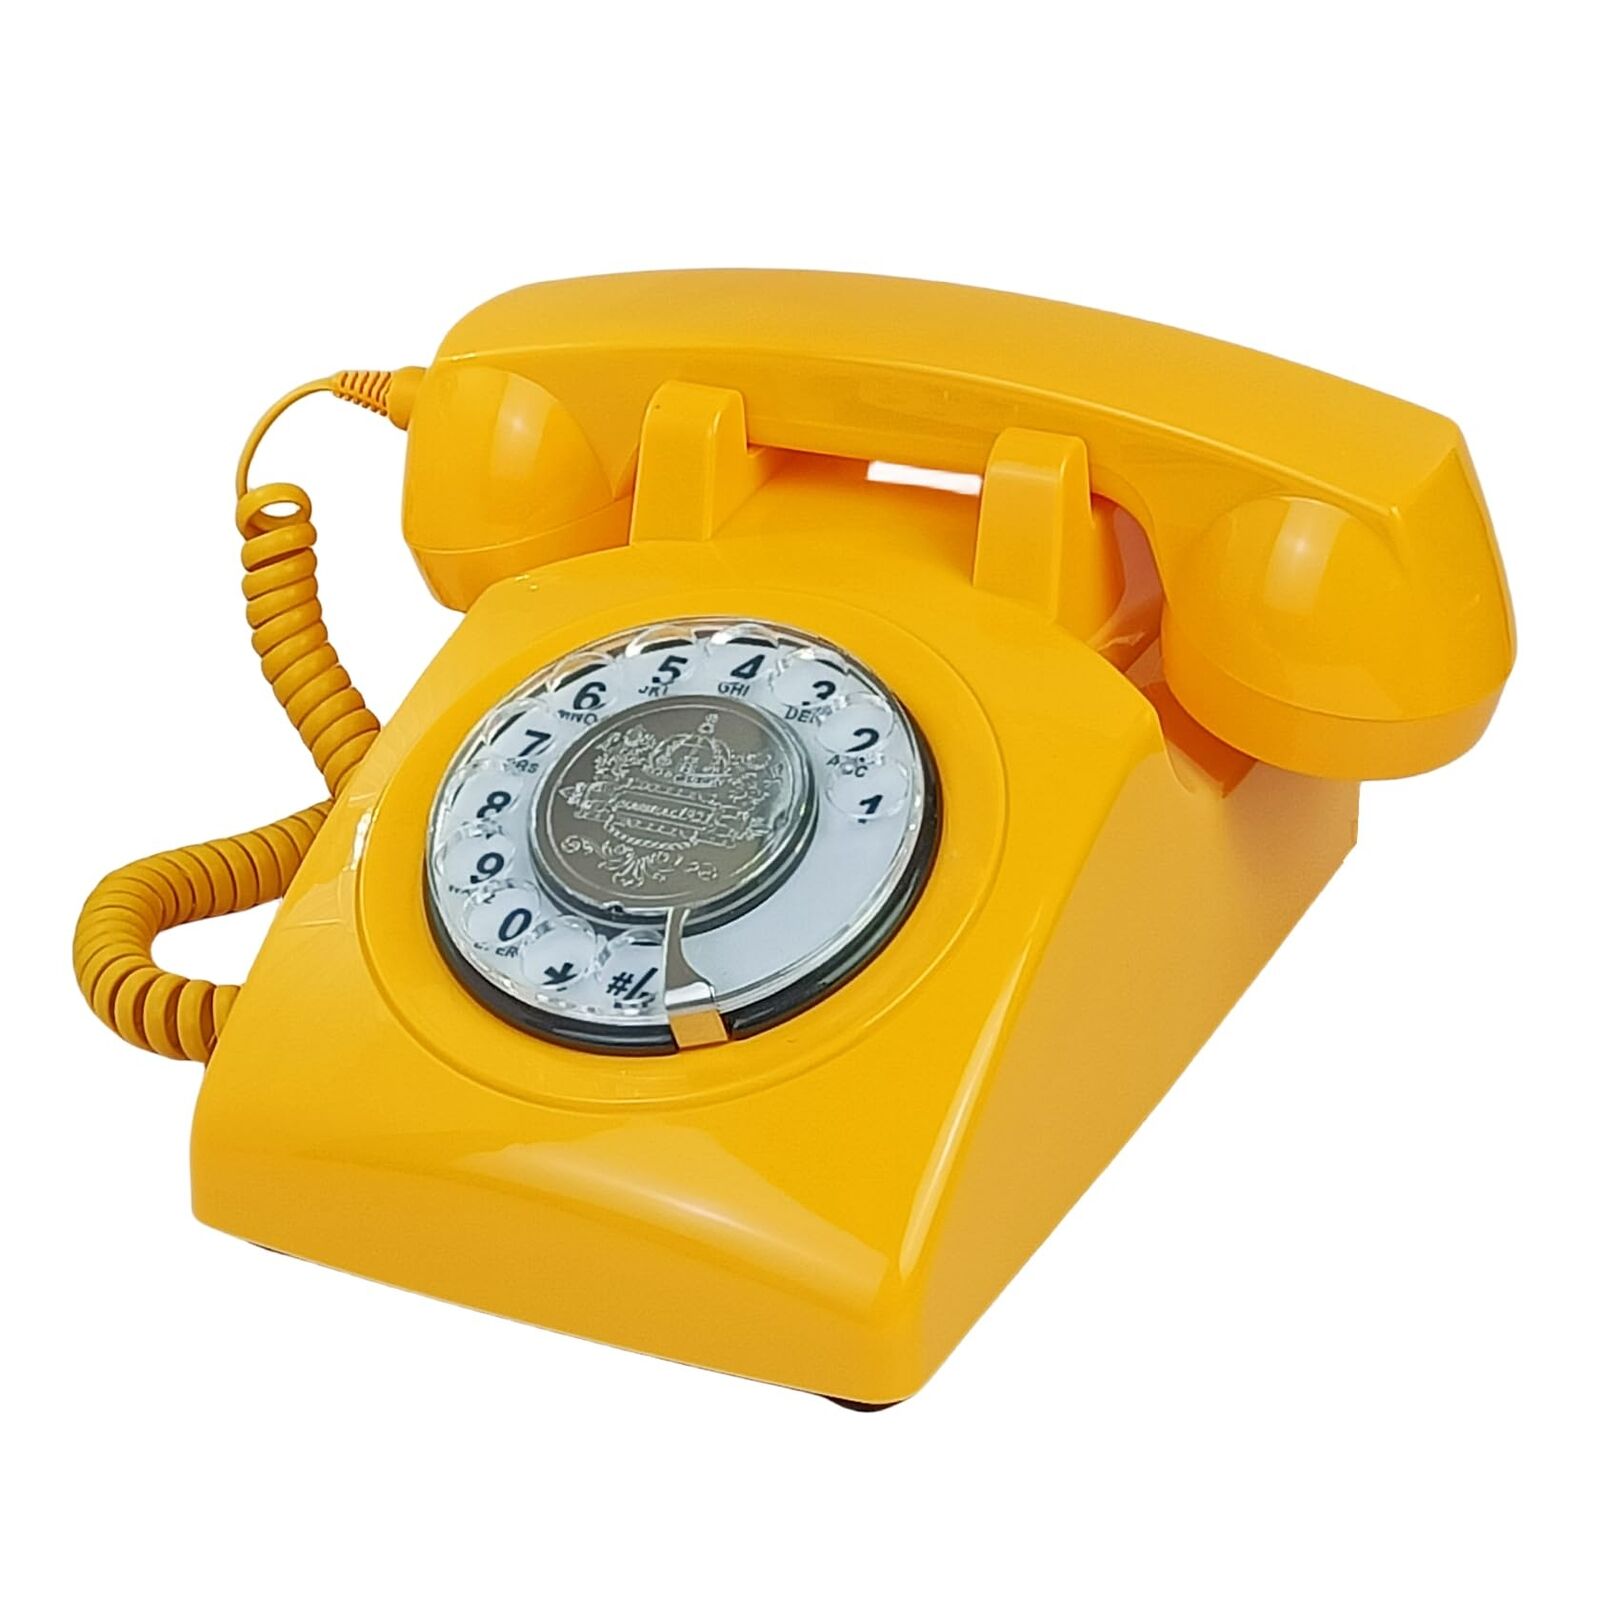 Corded Retro Phone, TelPal Landline Telephone with Old Fashion Rotary Dial Ke...